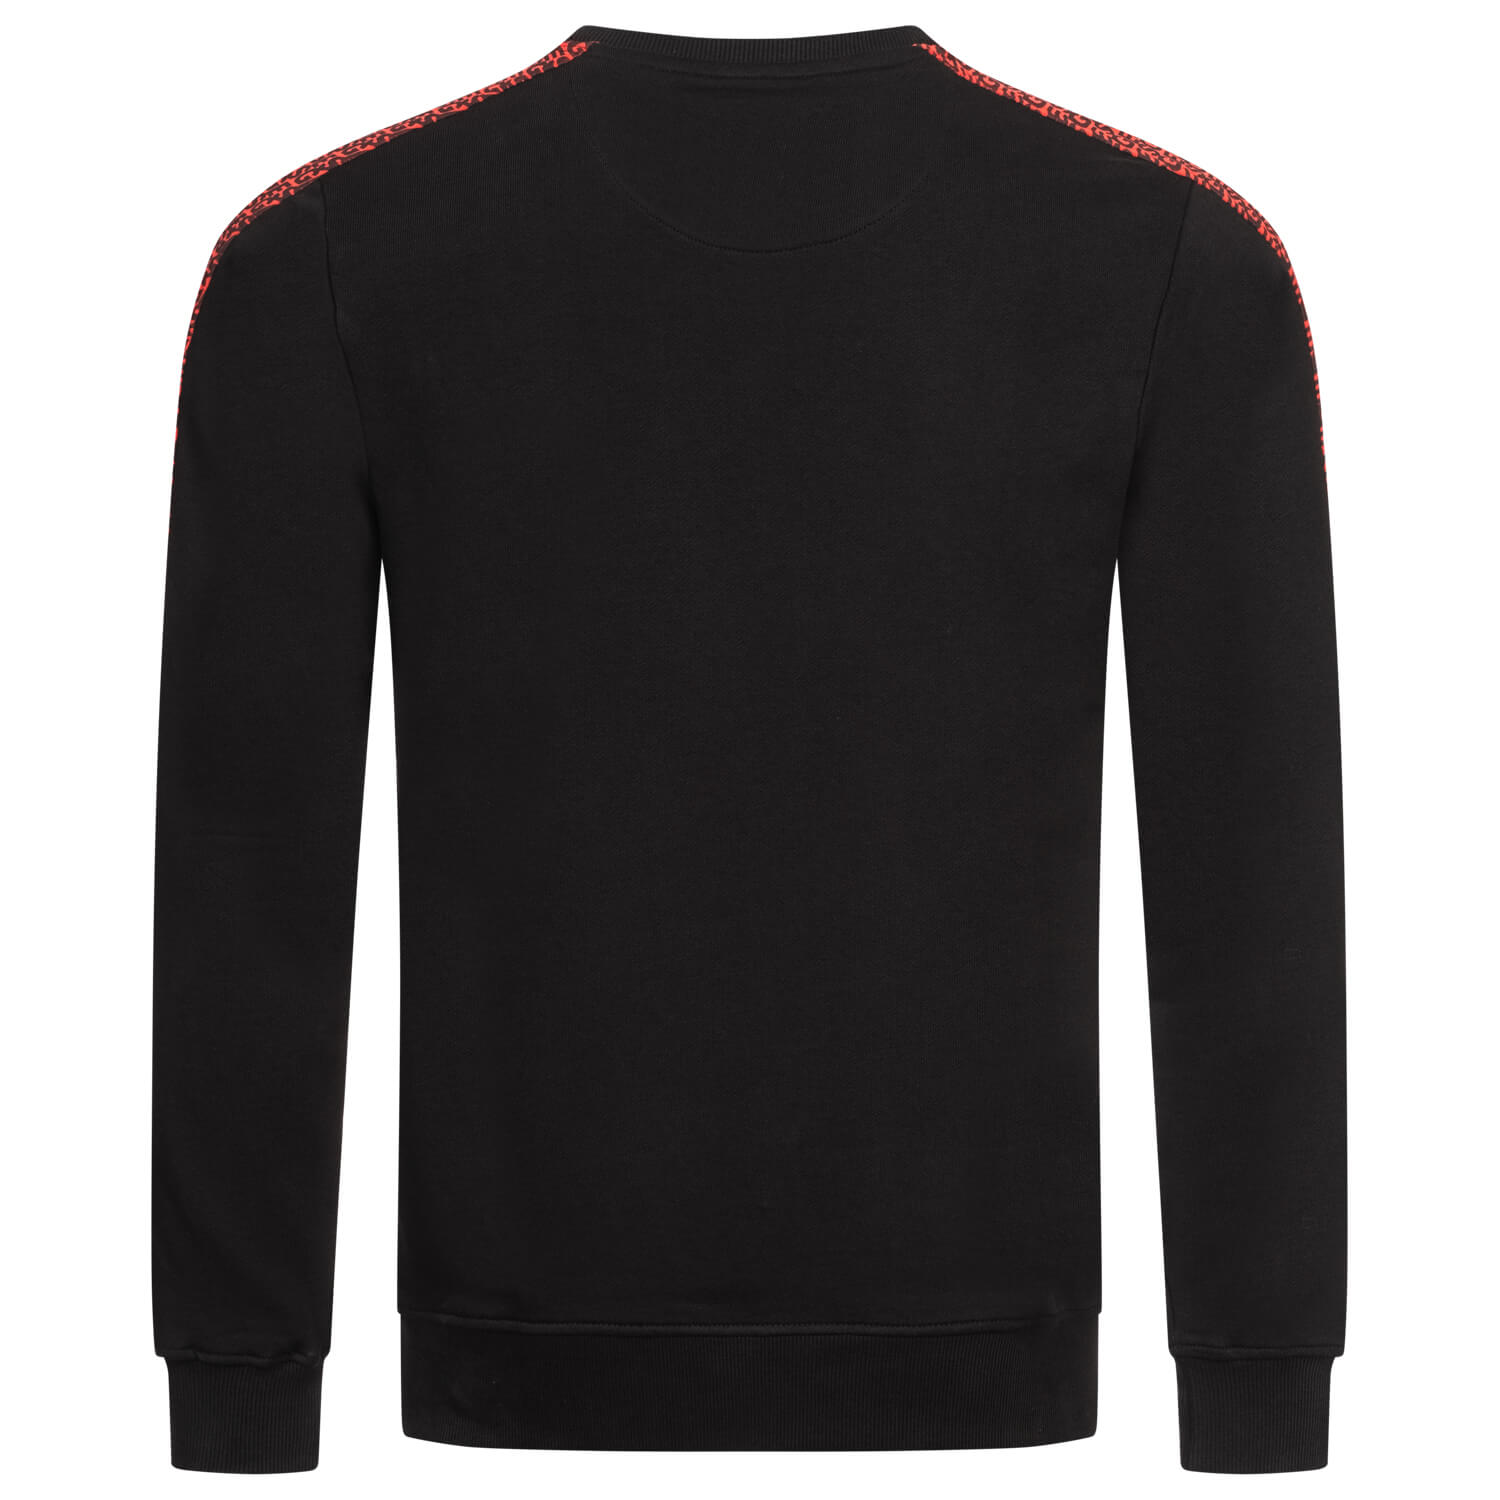 Bild 2: Sweater Red SGE